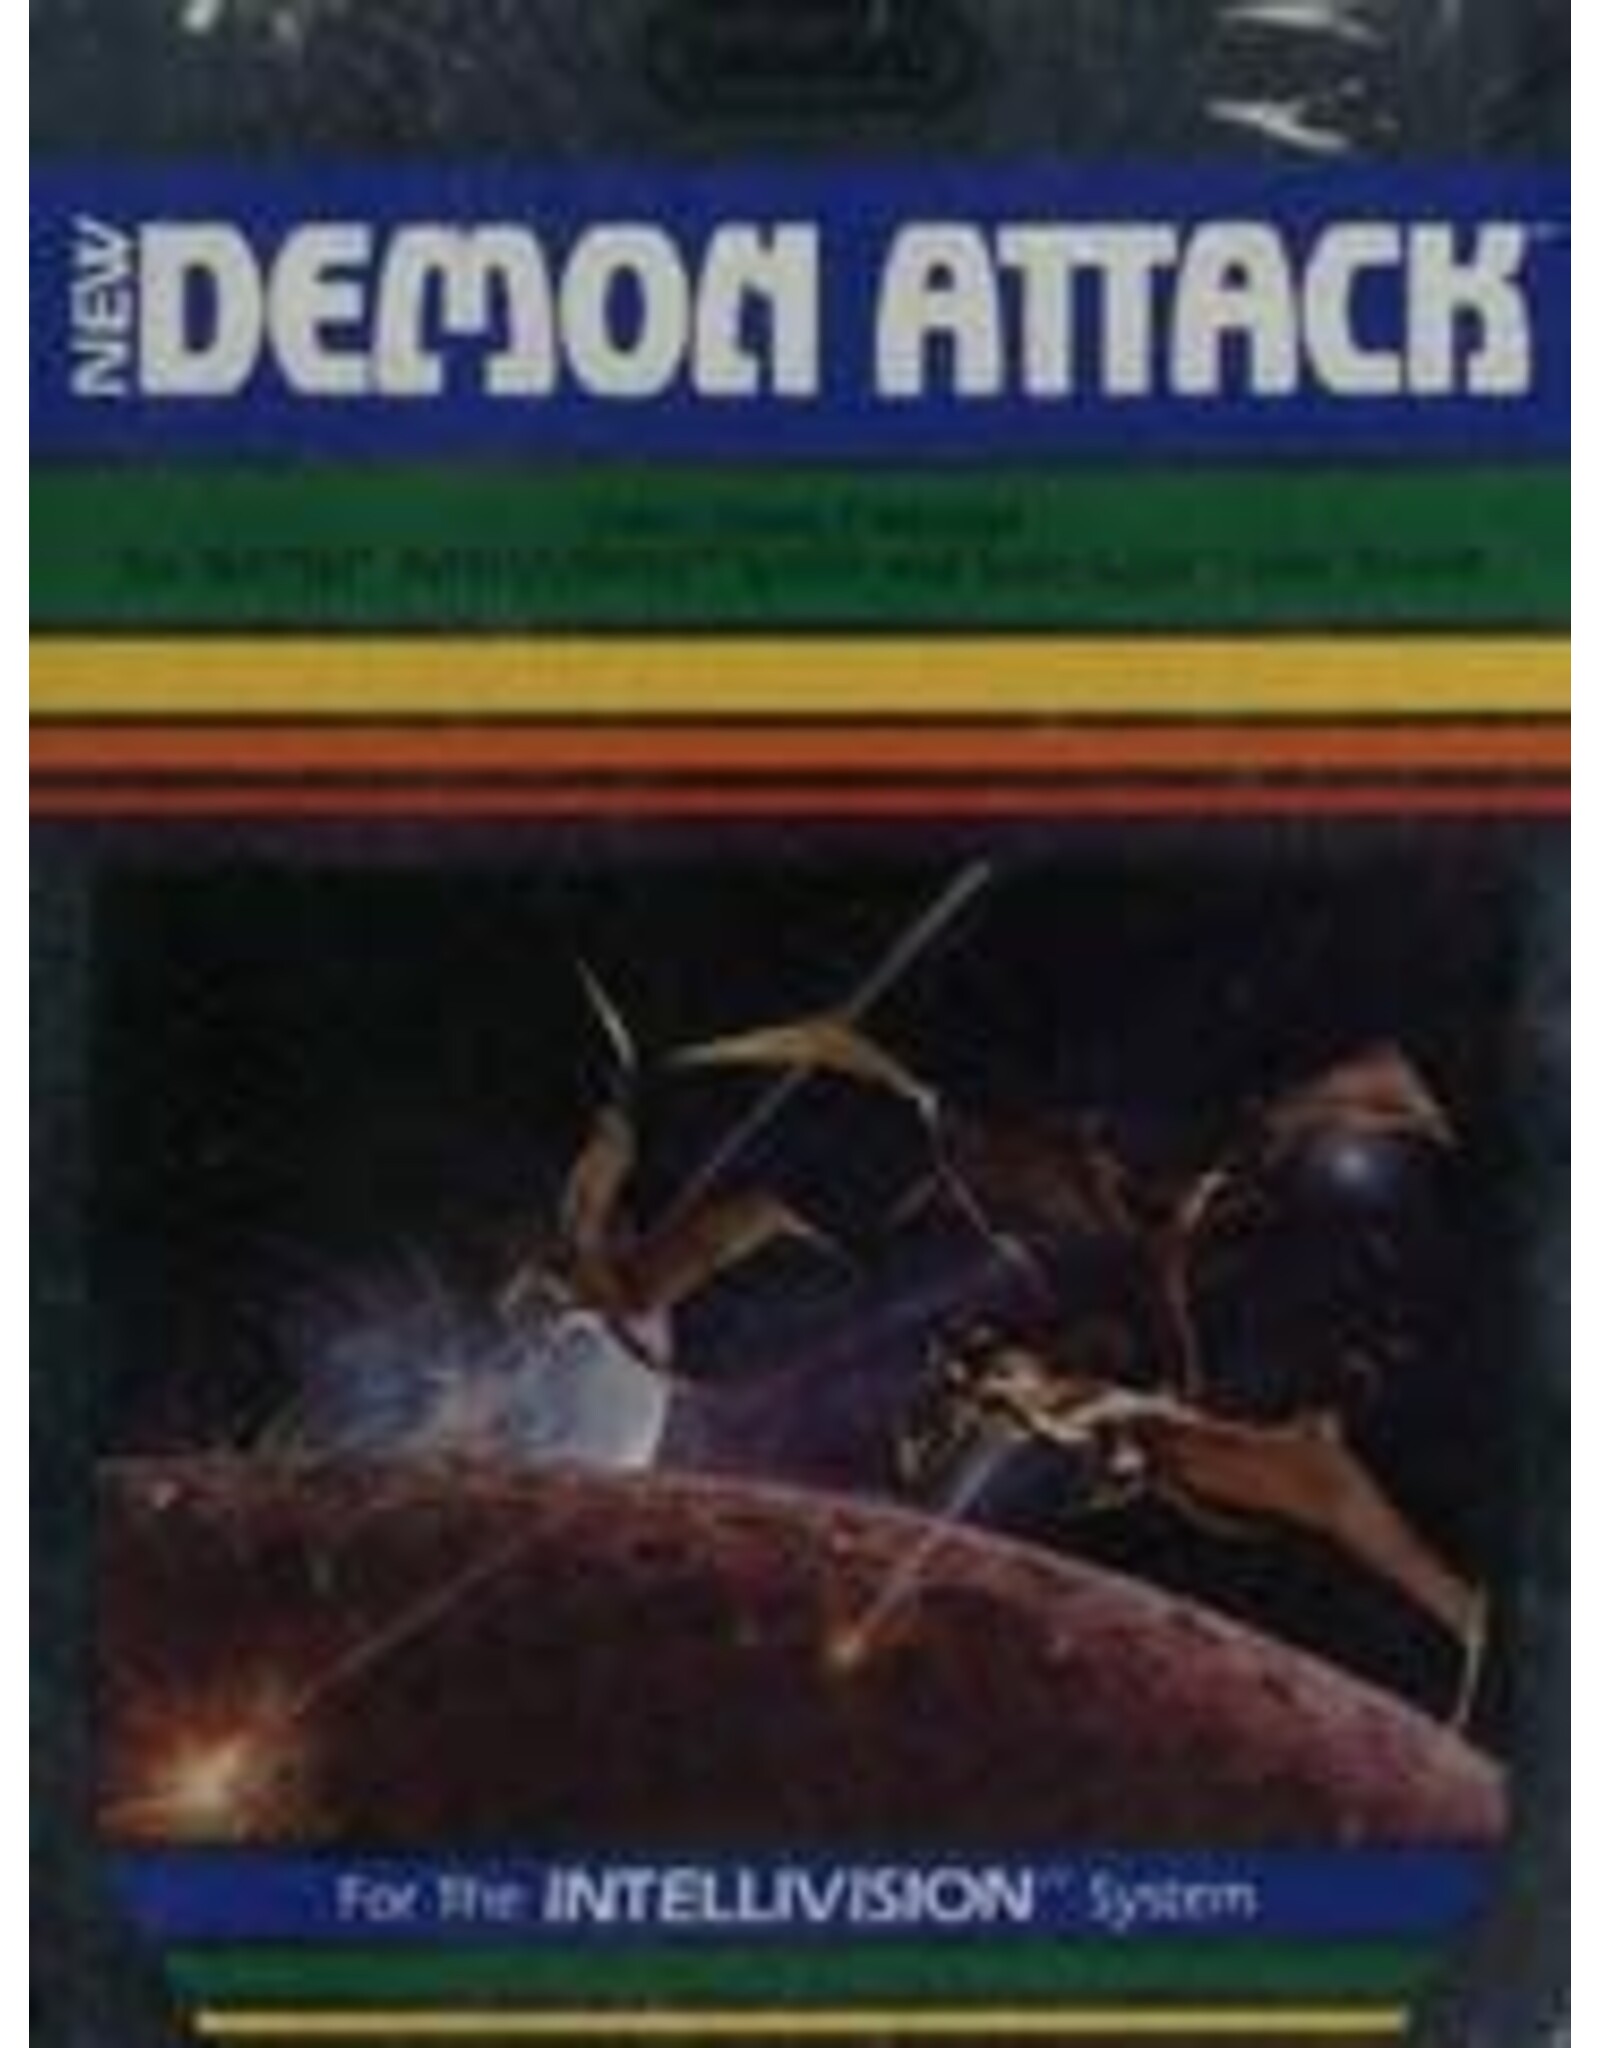 Intellivision Demon Attack (No Manual or Overlays, Damaged Box)